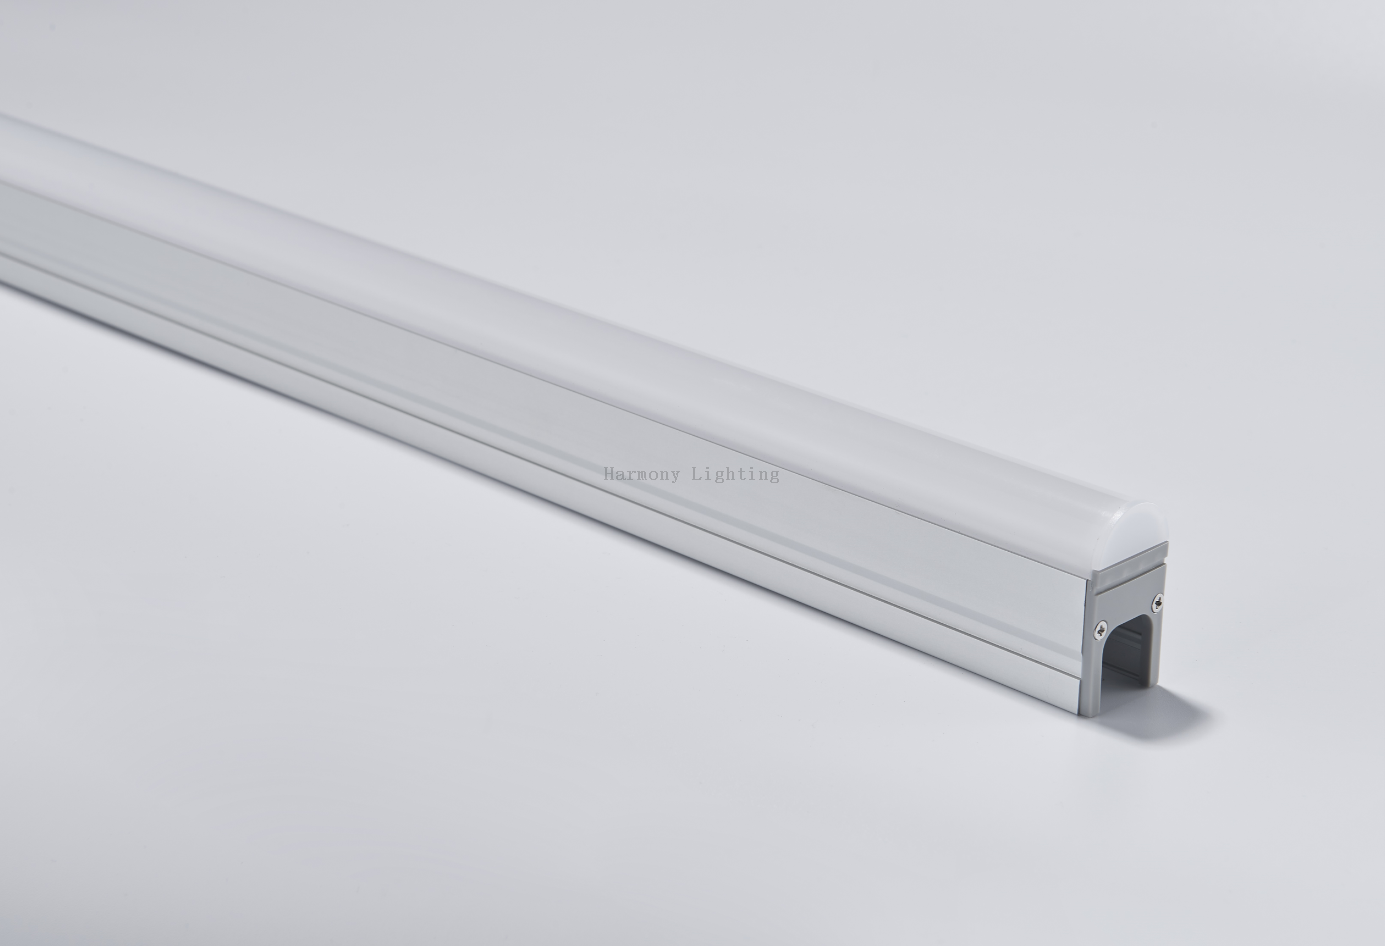 RH-C25 12W Waterproof led linear bar light addressable digital RGB outdoor aluminum profile led wall washer